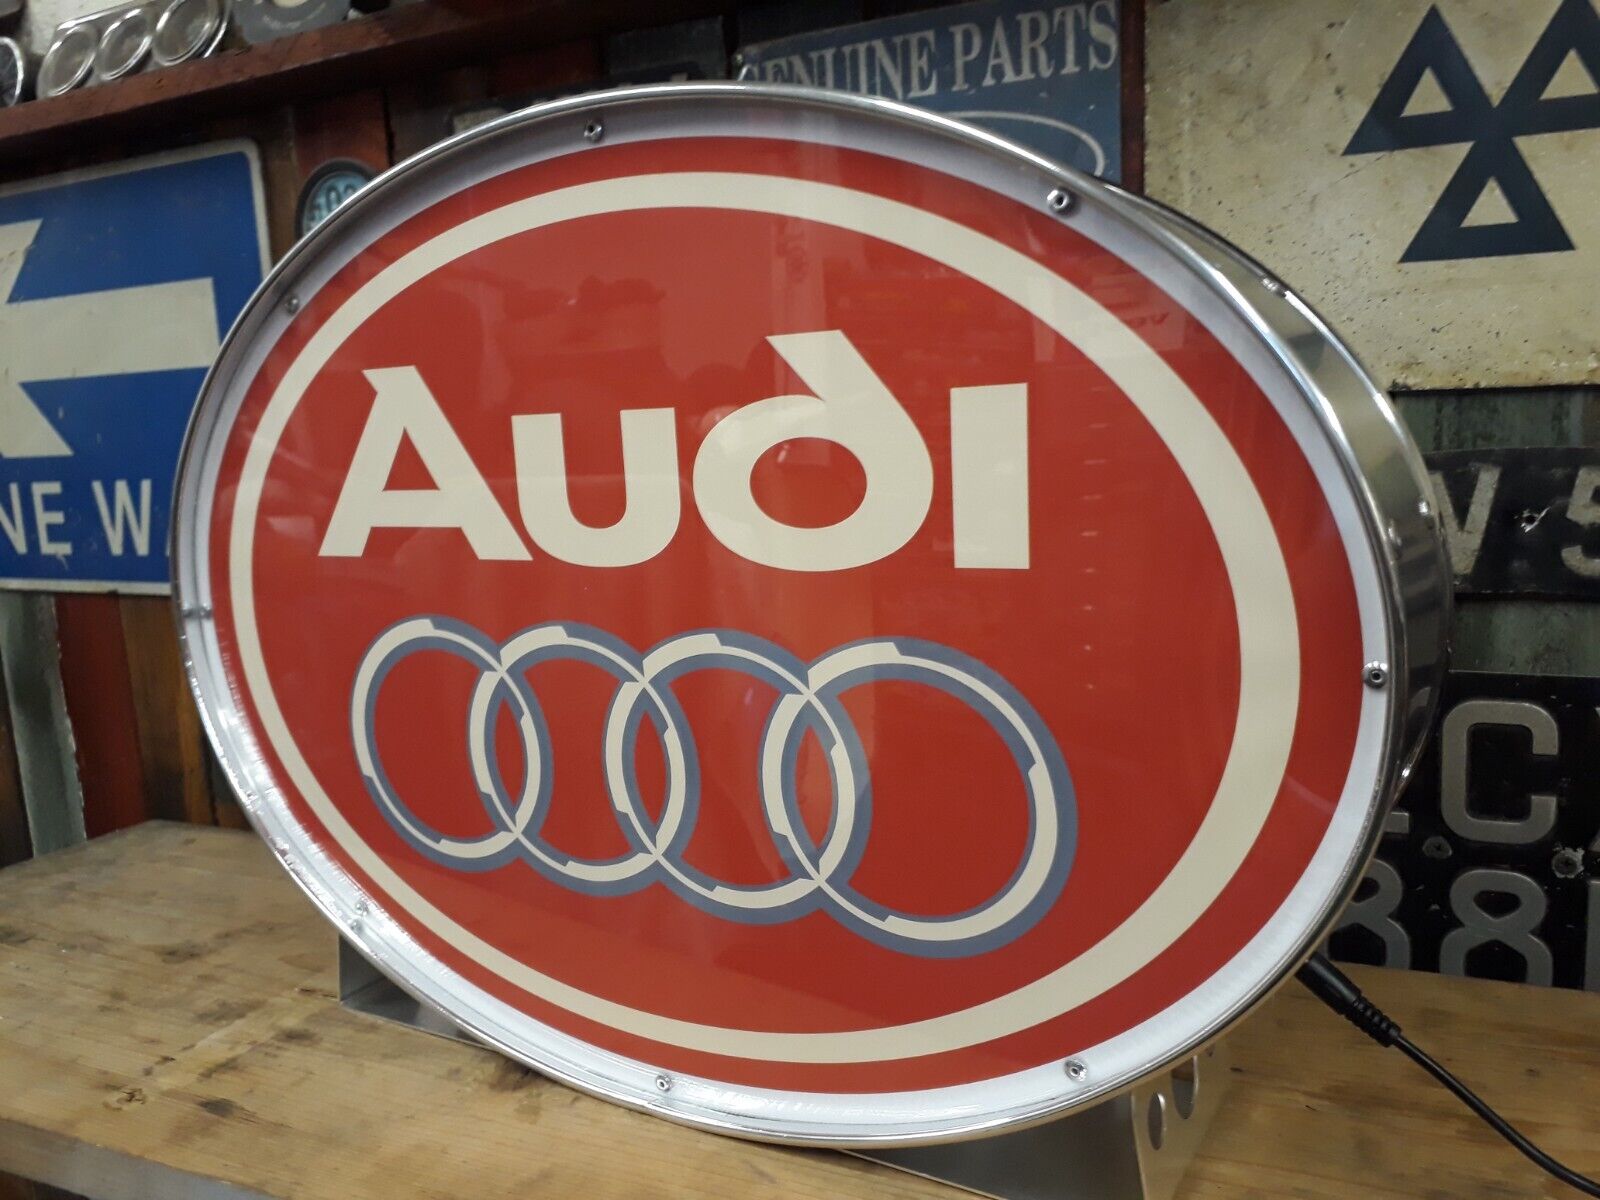 Audi,quattro,rally,A6,80,100,illuminated,mancave,lightup sign,garage,workshop